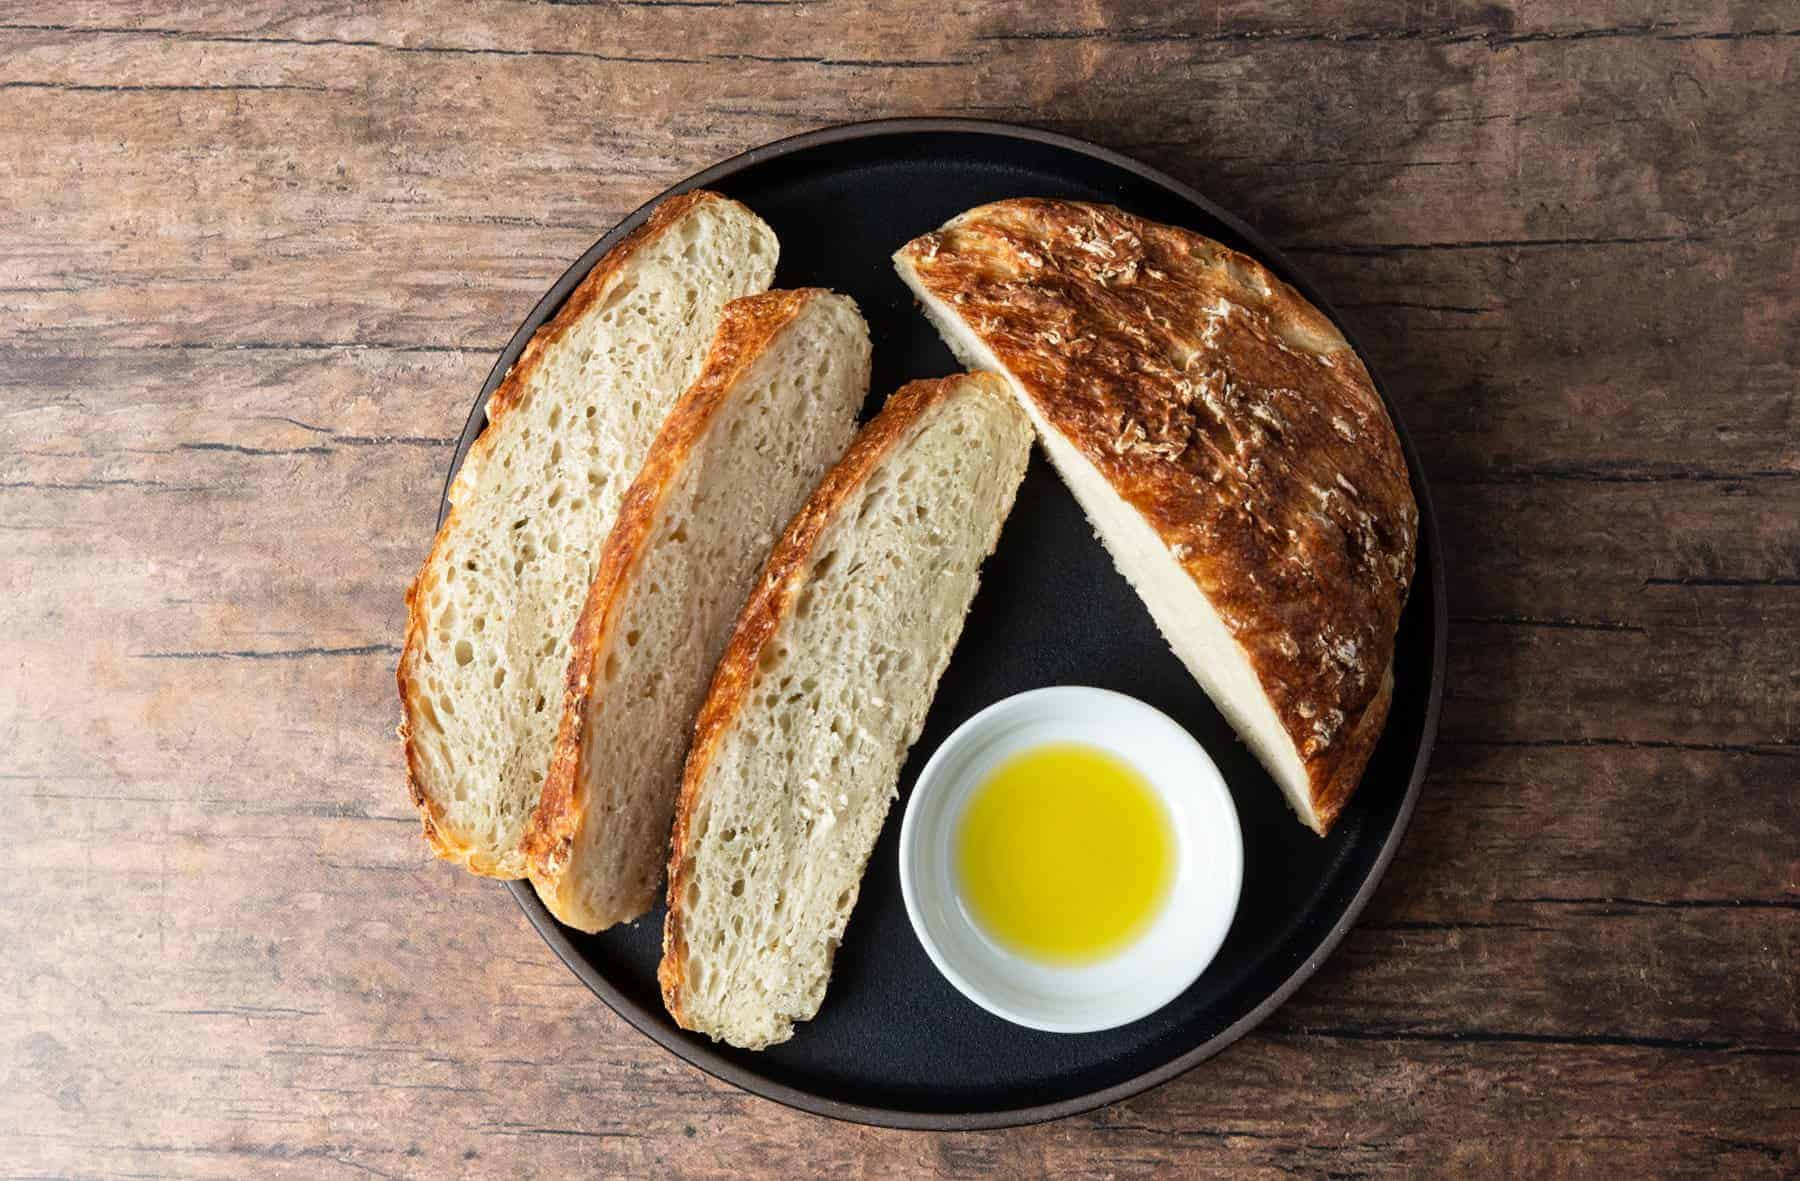 https://www.pressurecookrecipes.com/wp-content/uploads/2020/05/instant-pot-bread.jpg